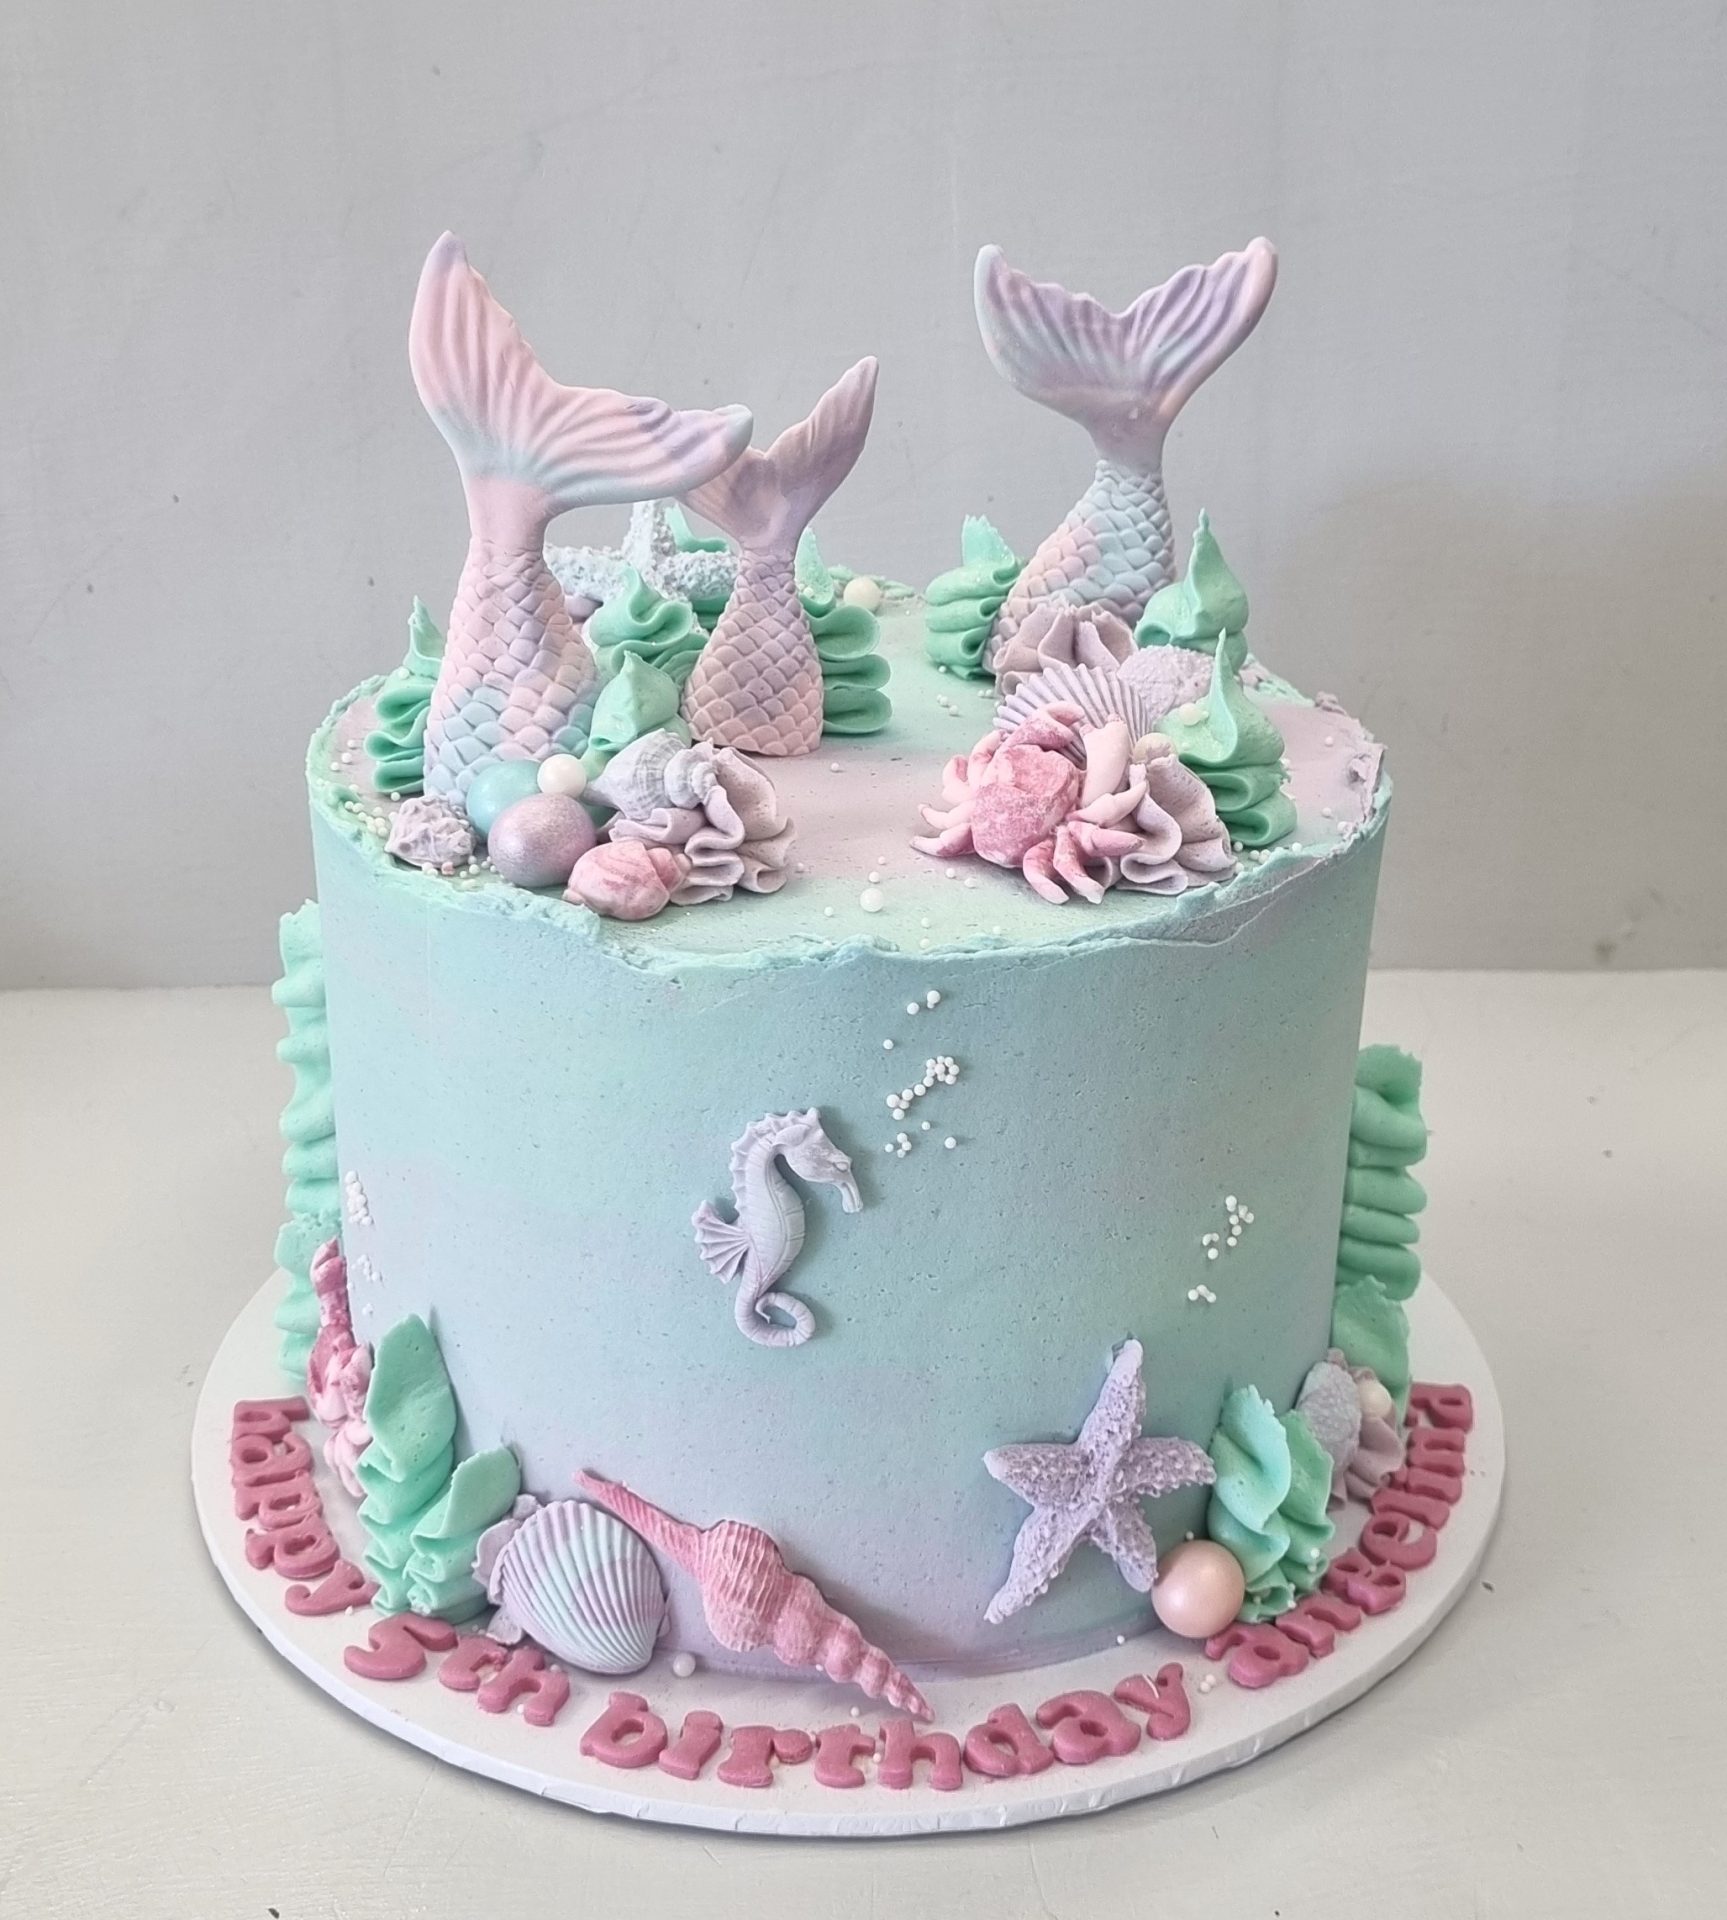 mermaid cake - let your sweet dreams come true